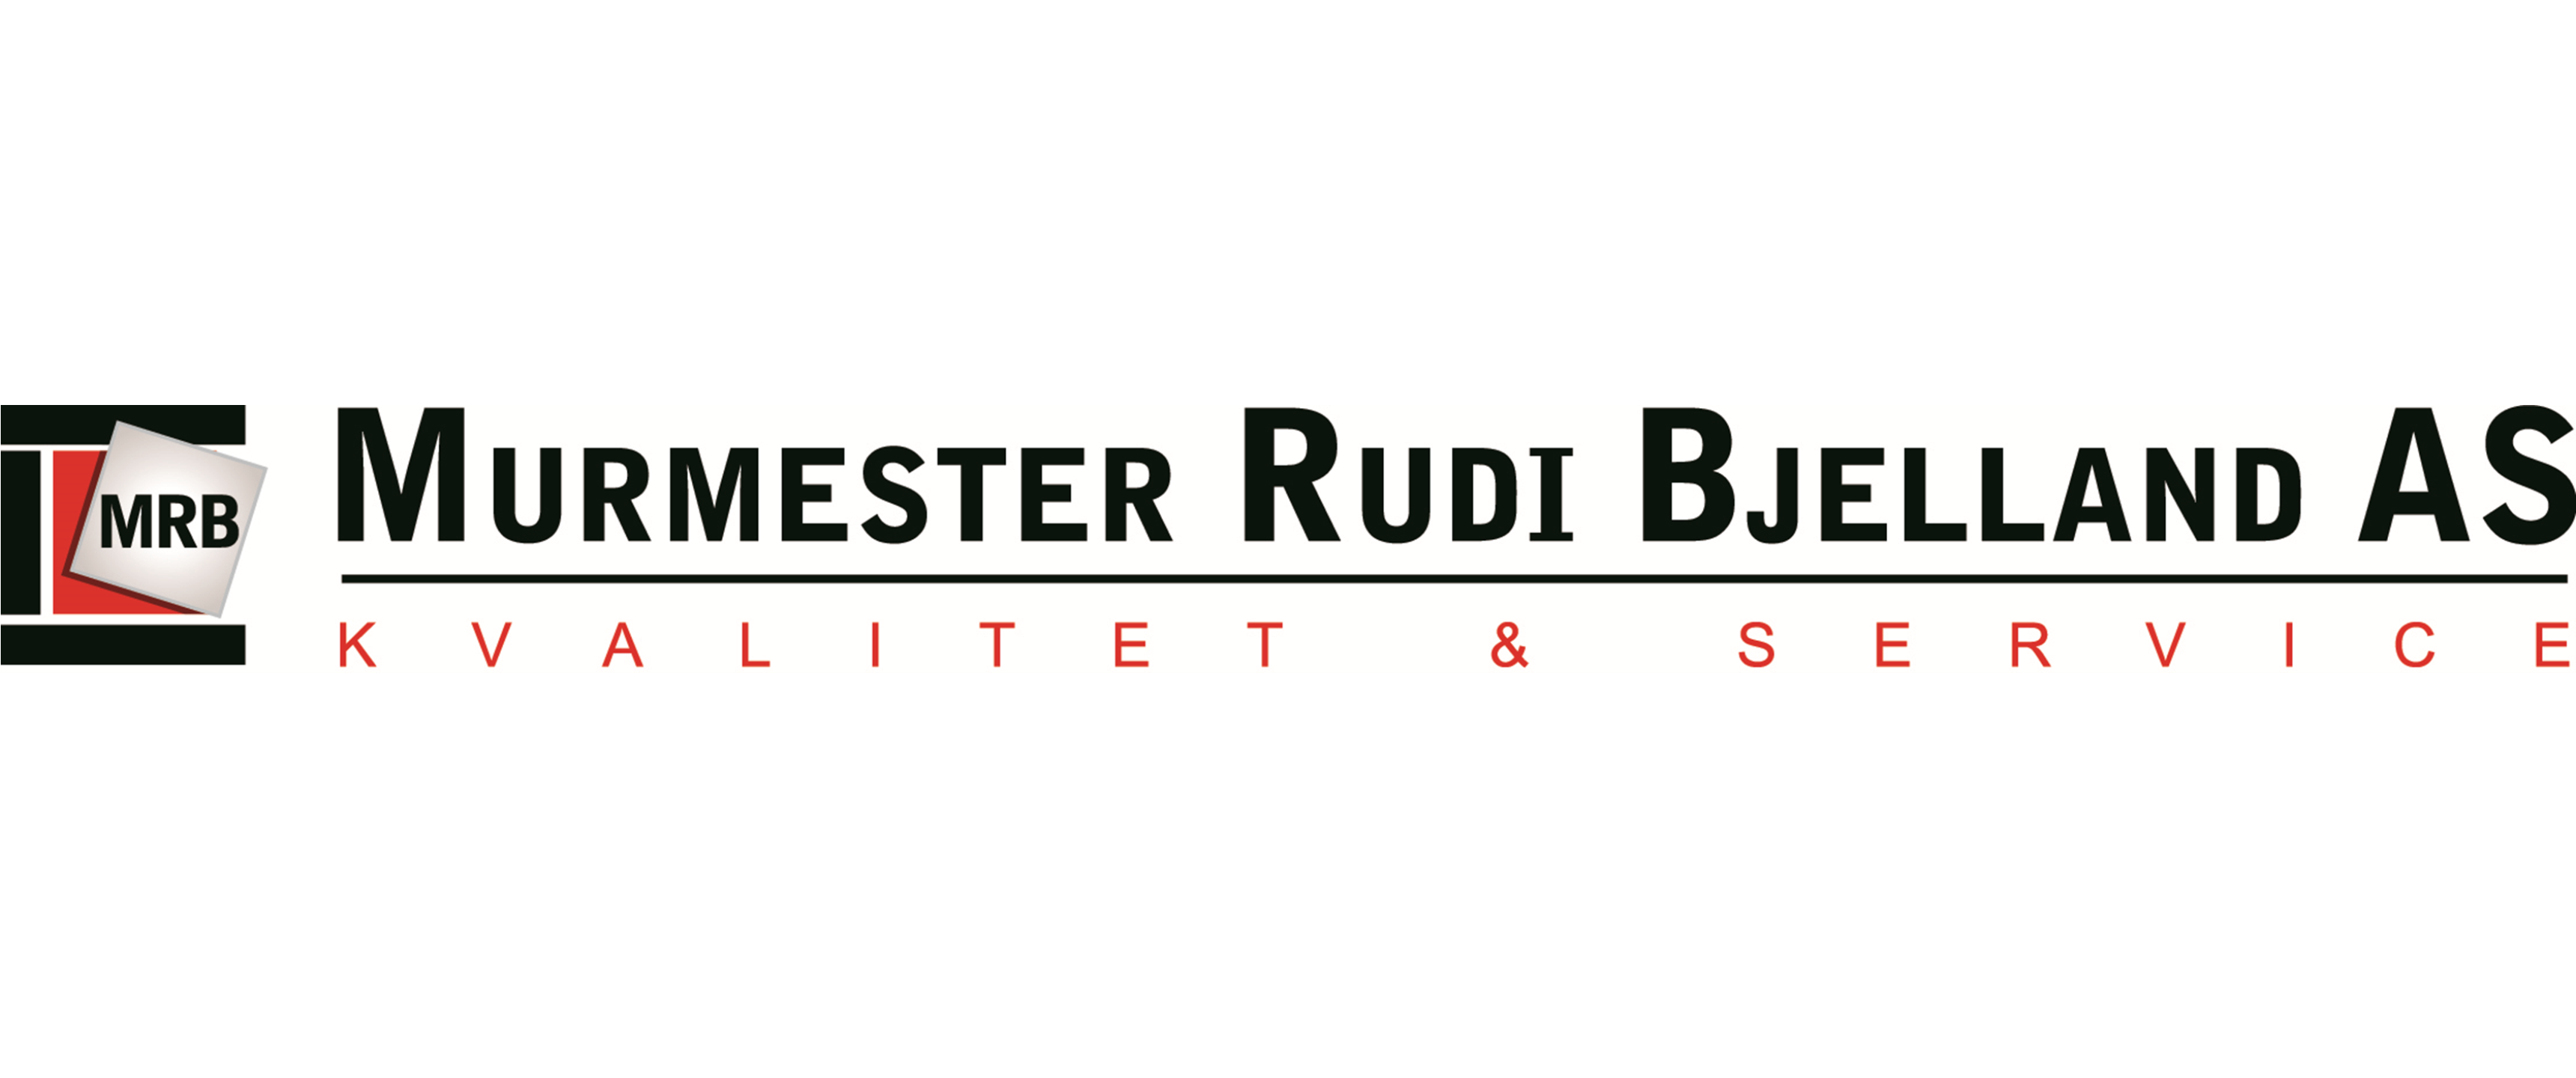 MURMESTER RUDI BJELLAND AS logo